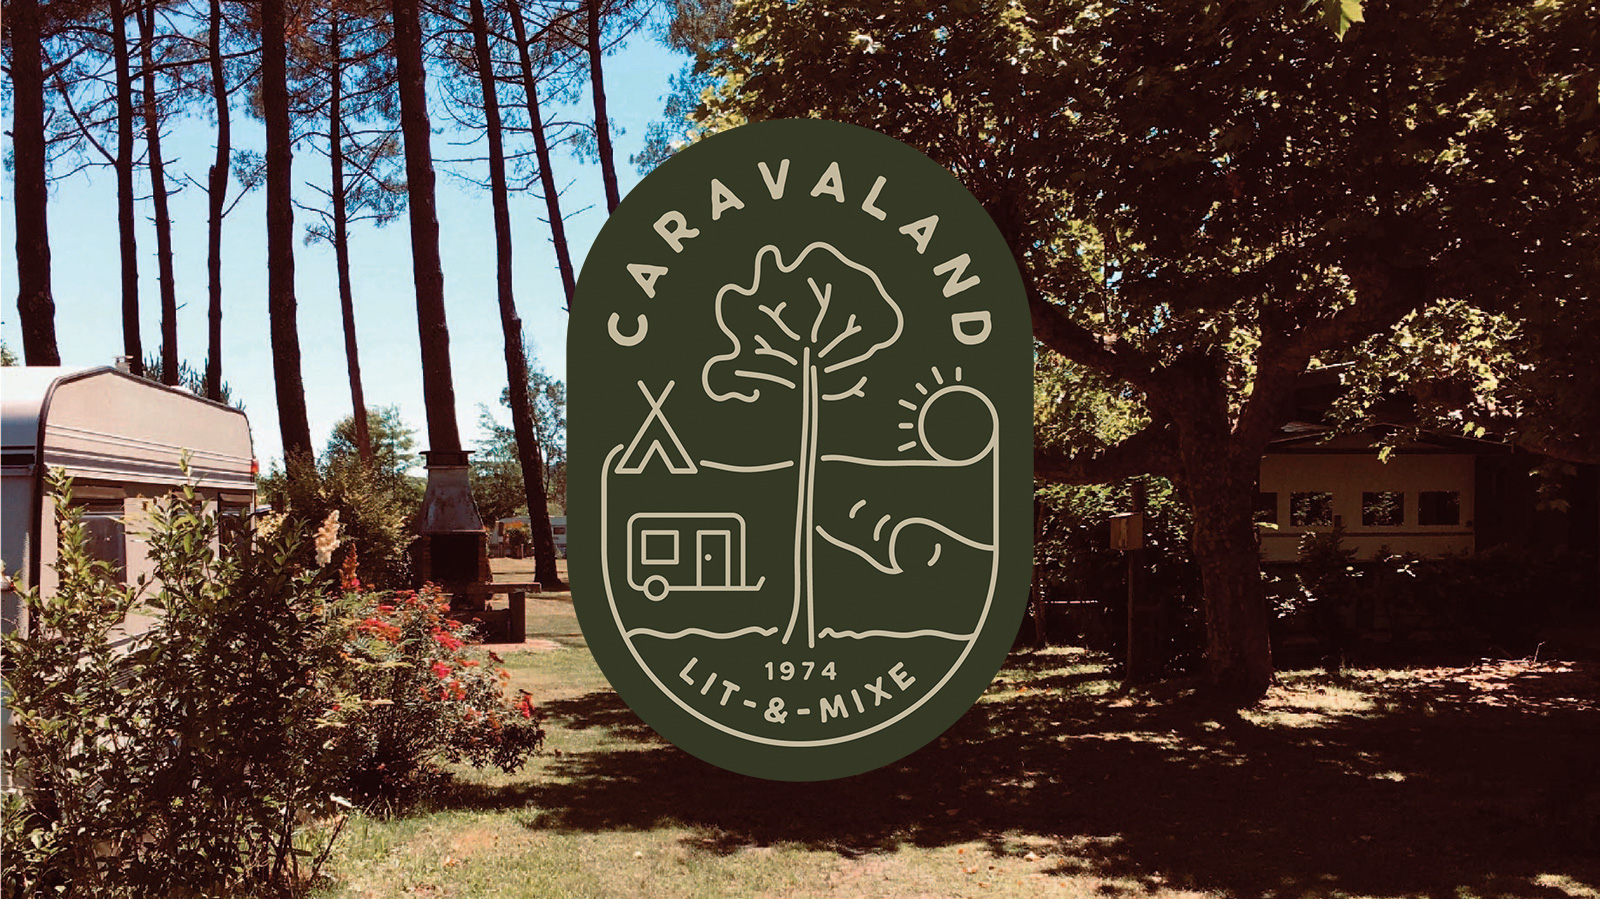 Campsite Caravaland